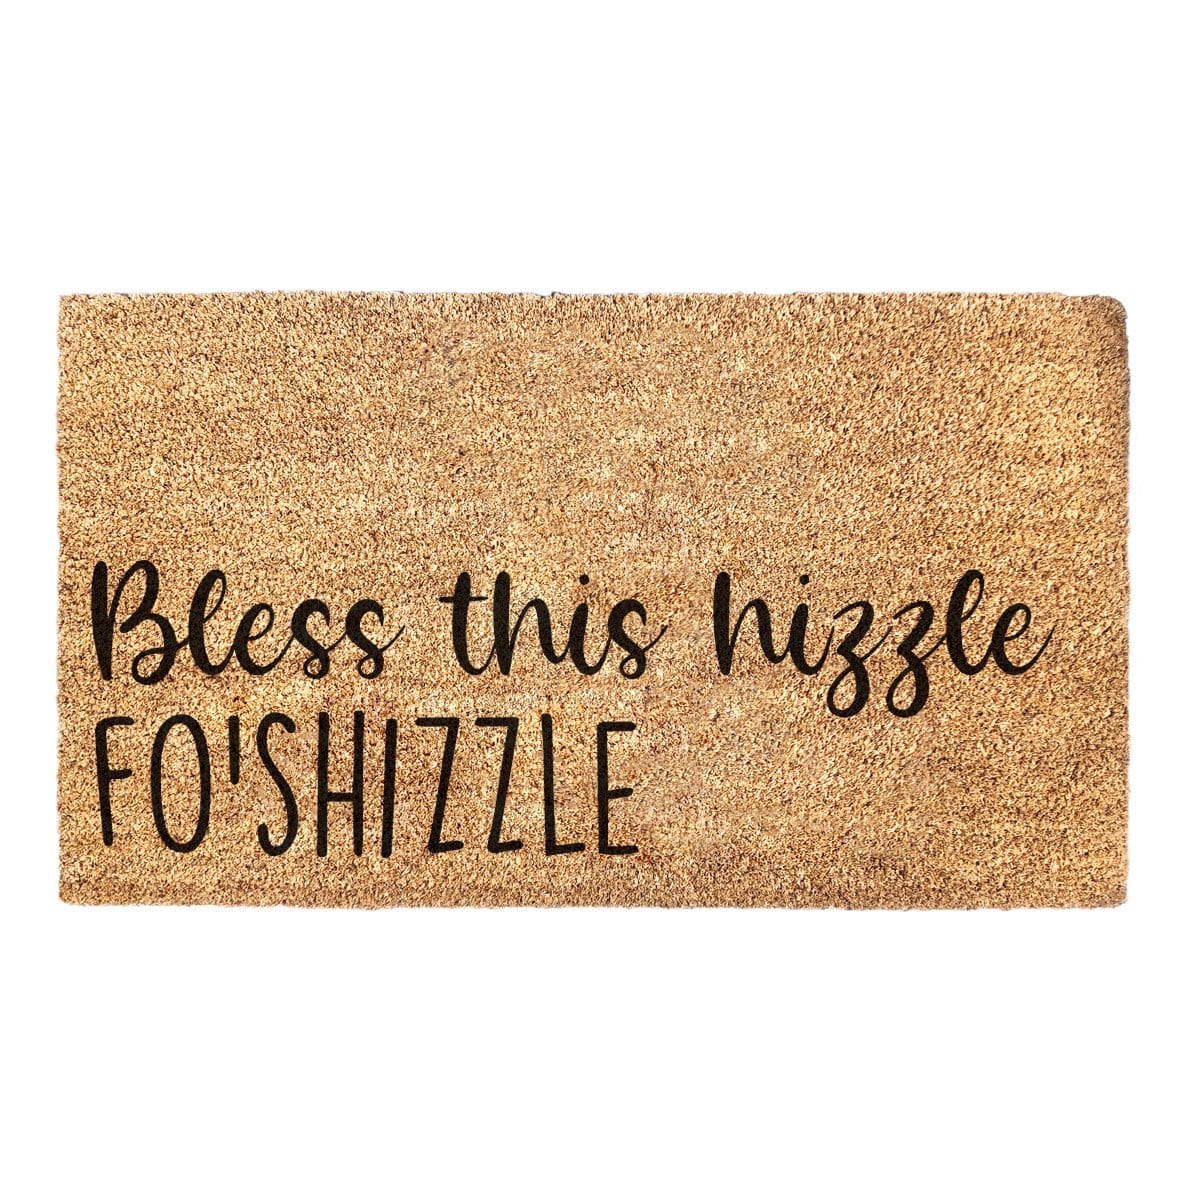 Bless This Hizzle Fo'Shizzle - Doormat